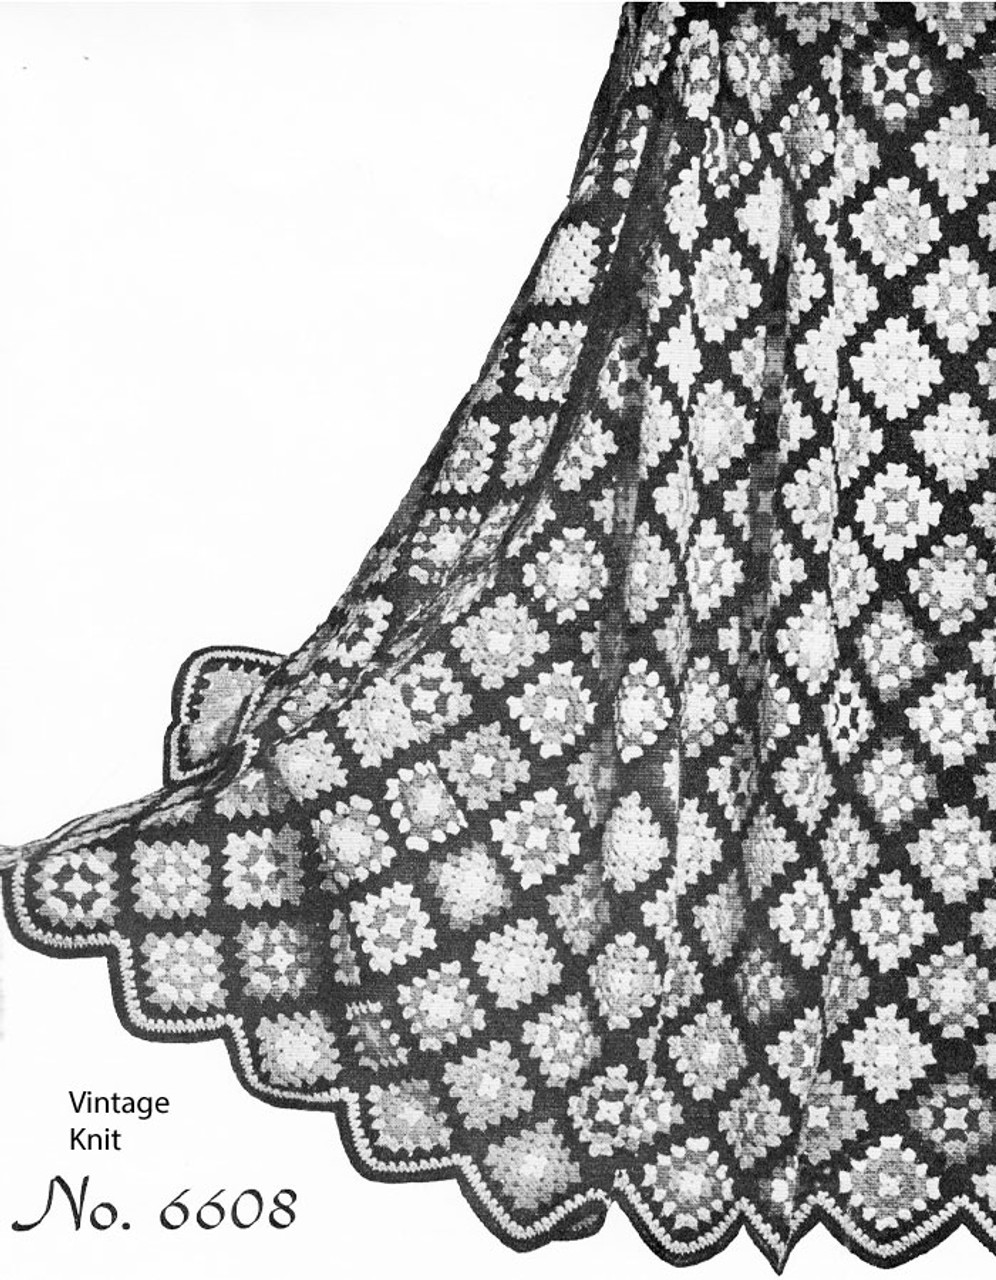 Vintage crochet granny afghan pattern